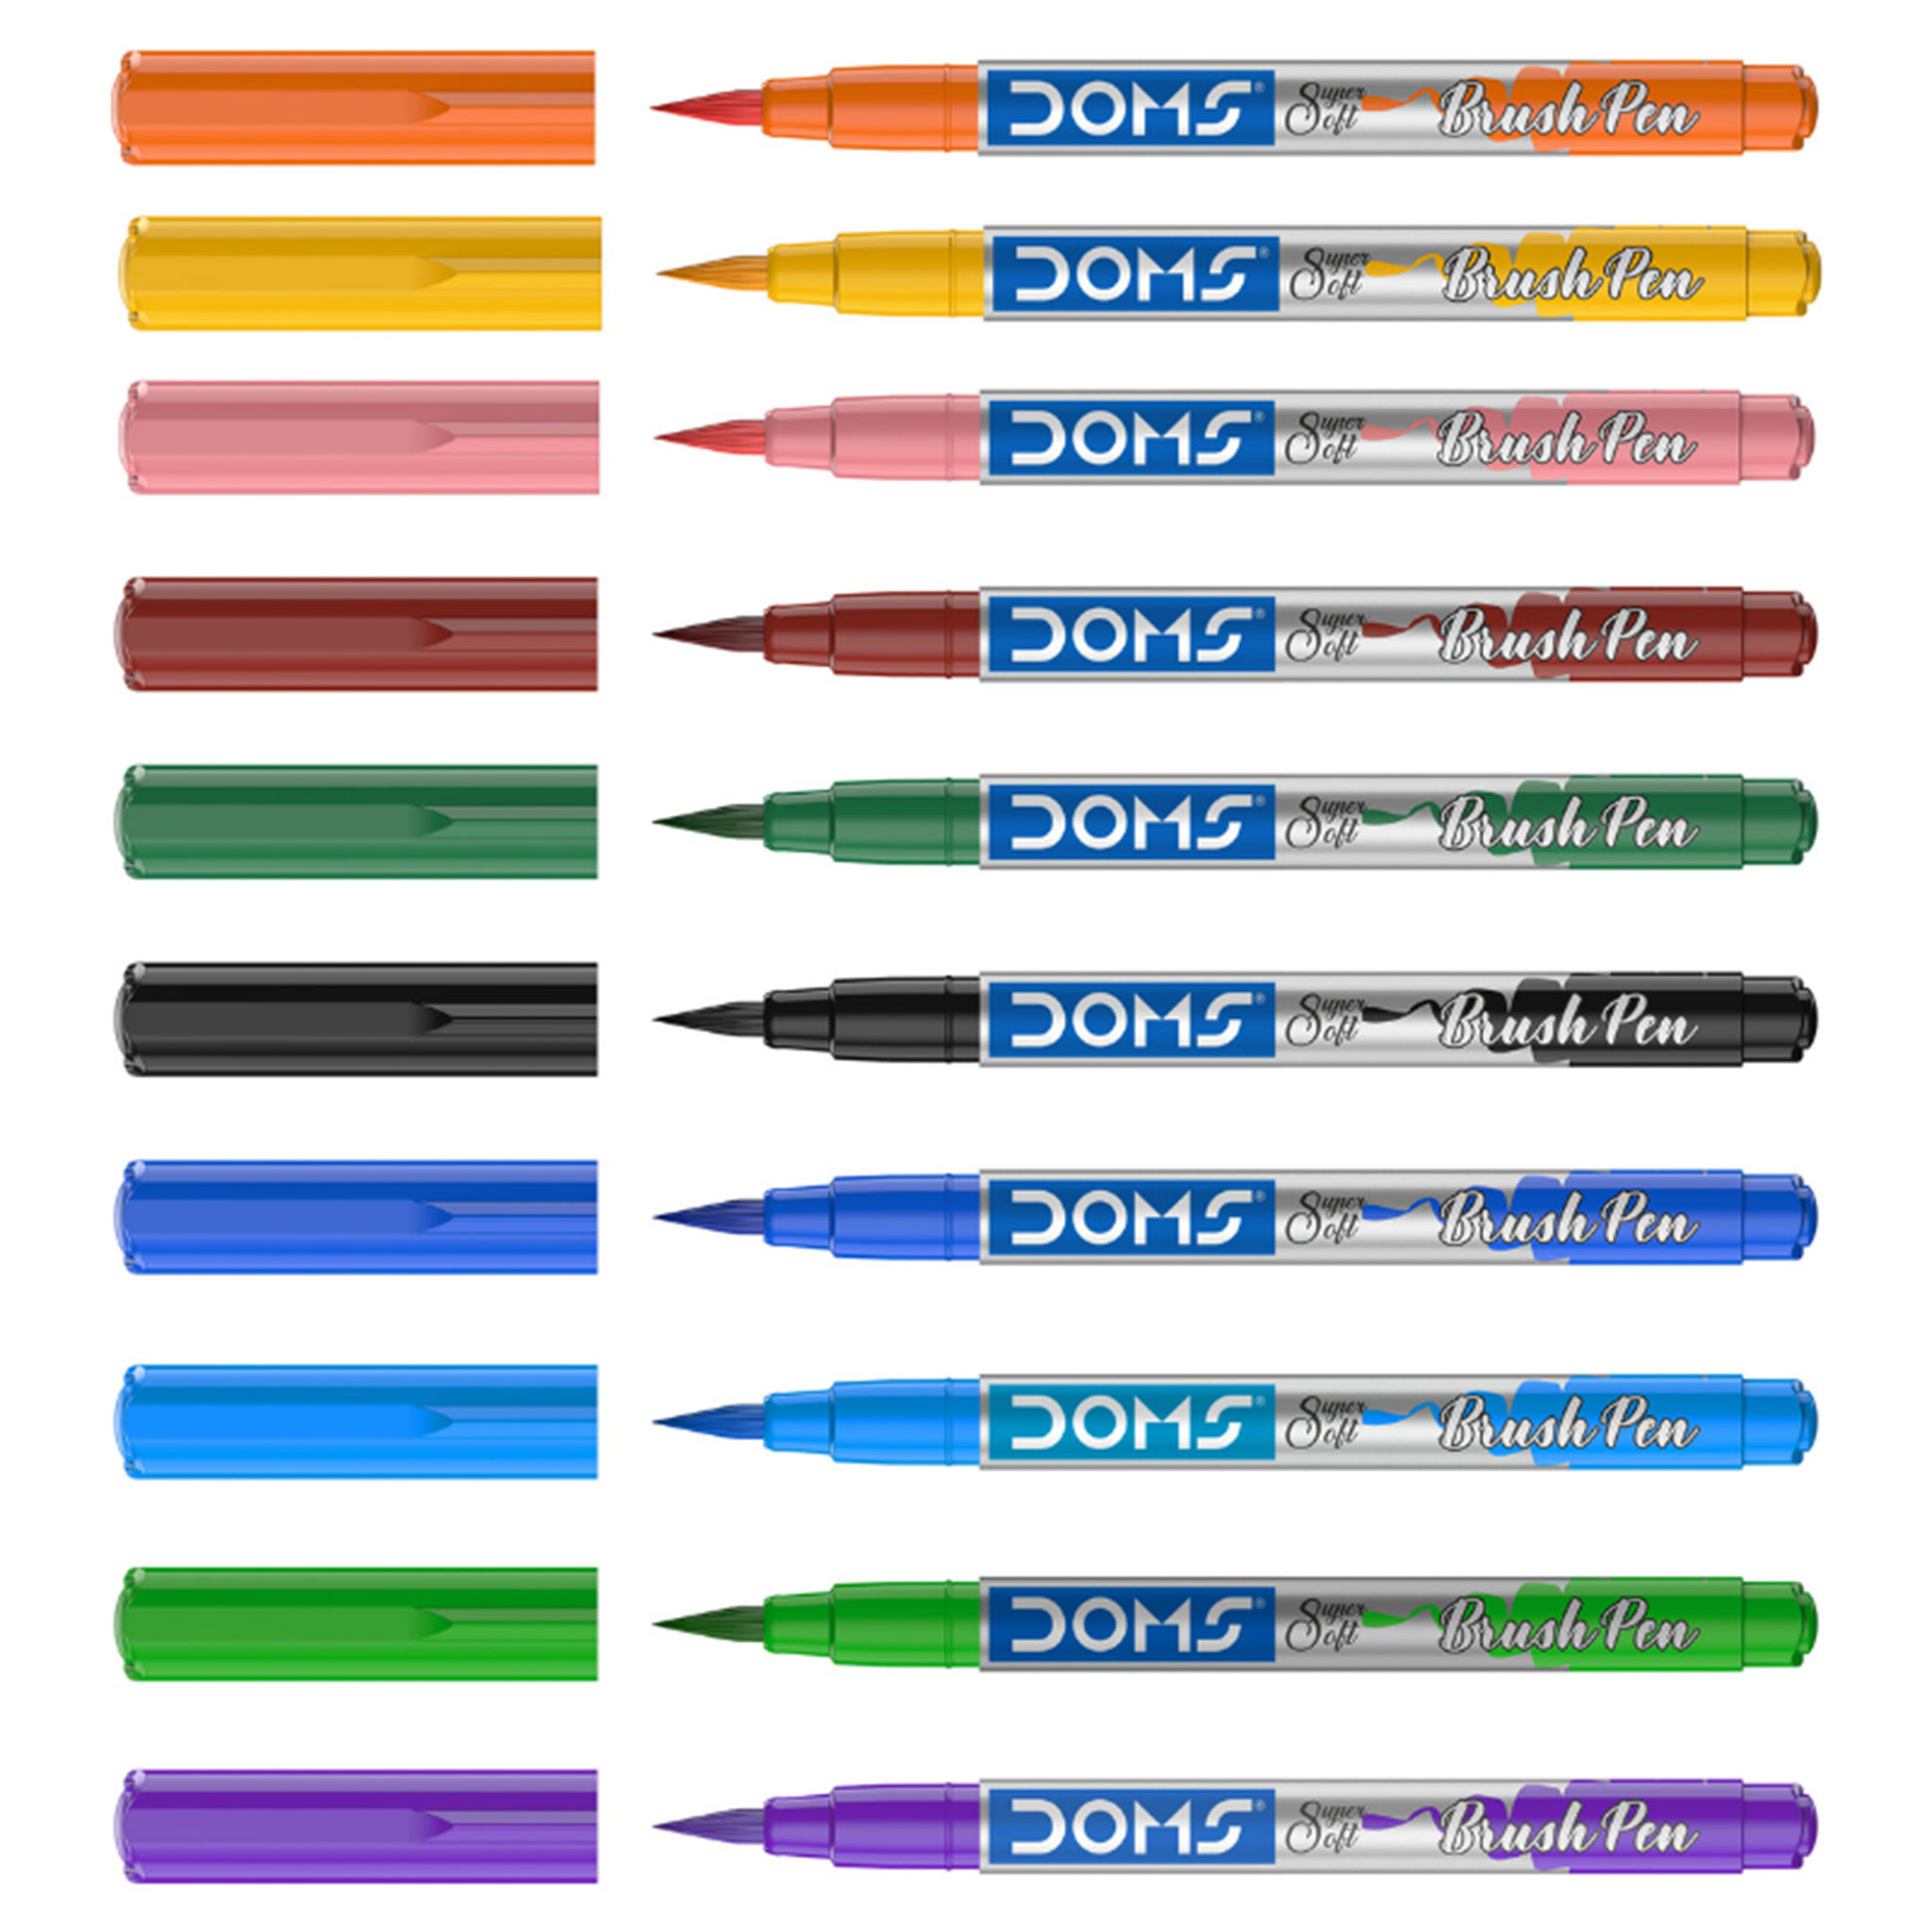 Doms Brush Pen- 14 Shades : Doms